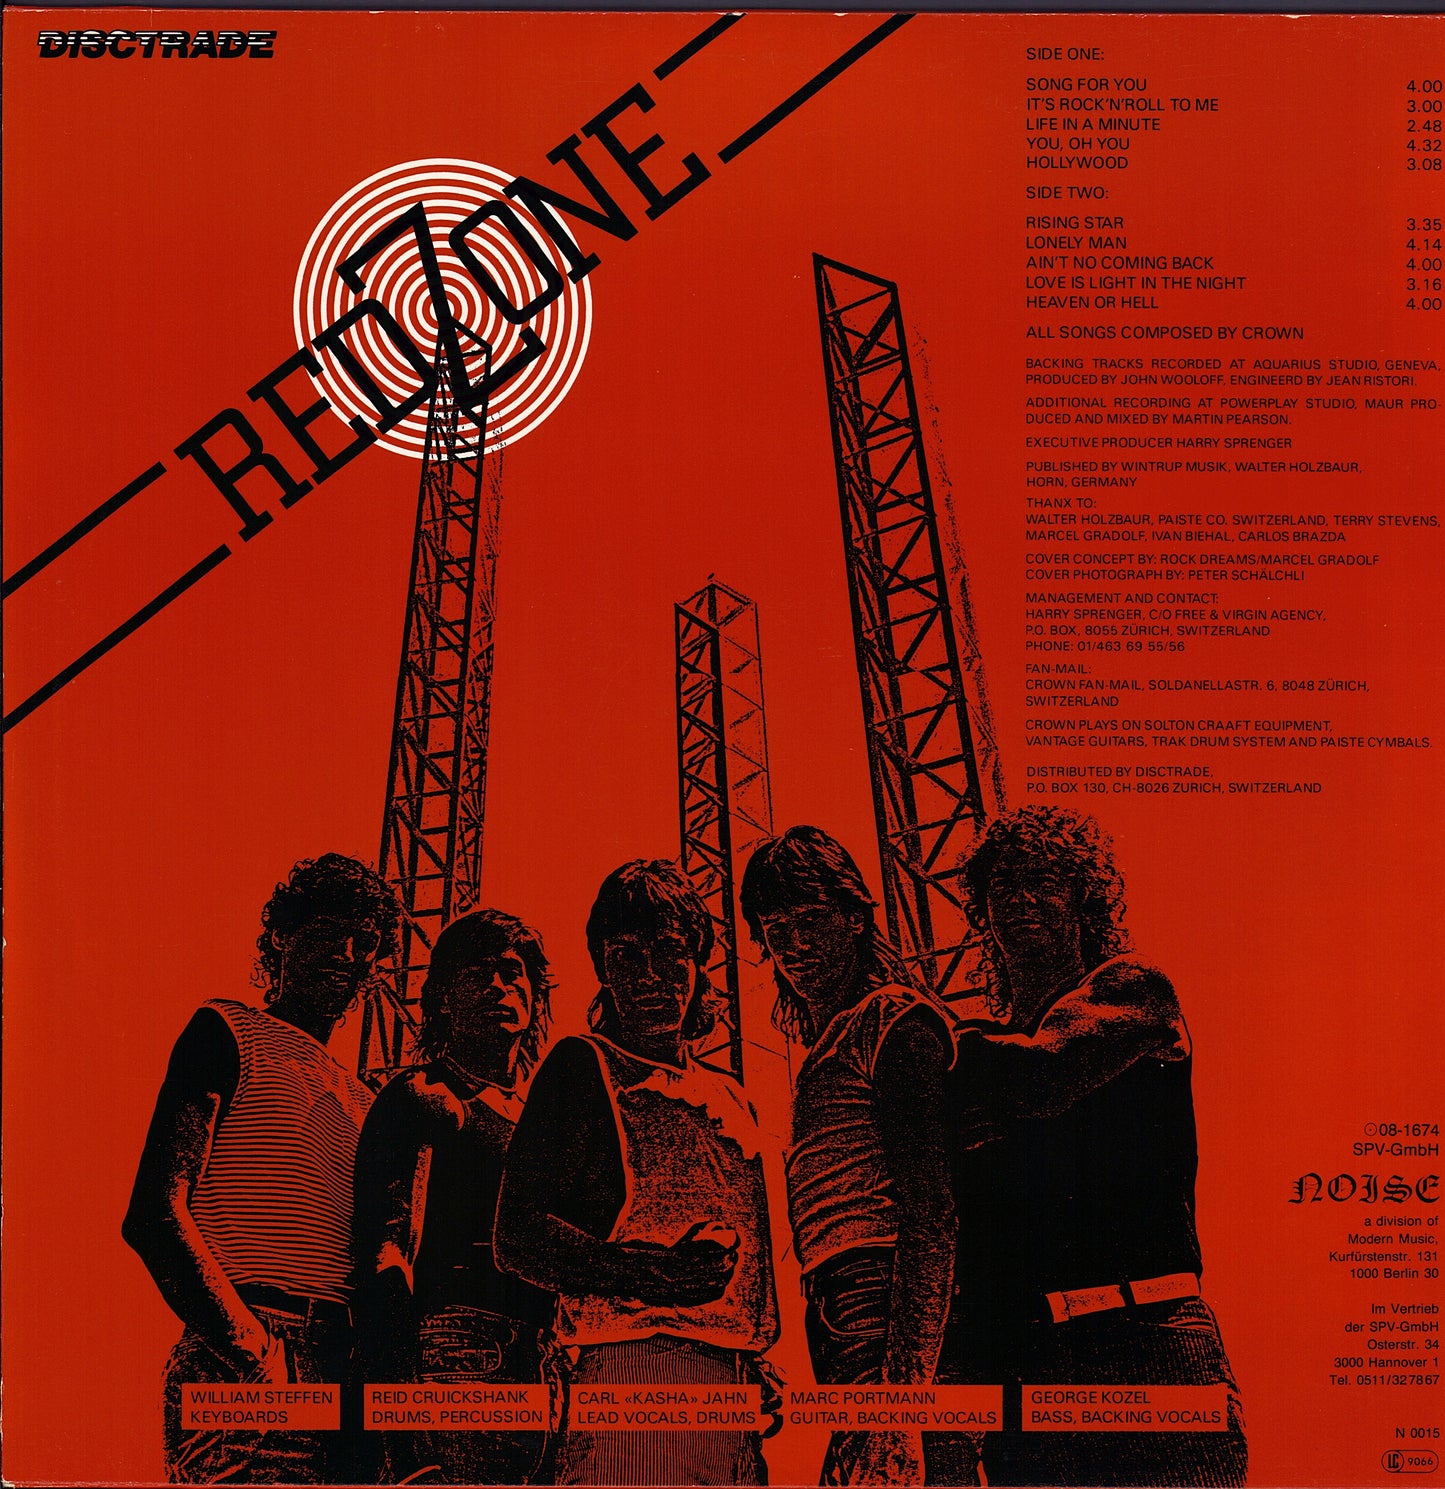 Crown - Red Zone Vinyl LP